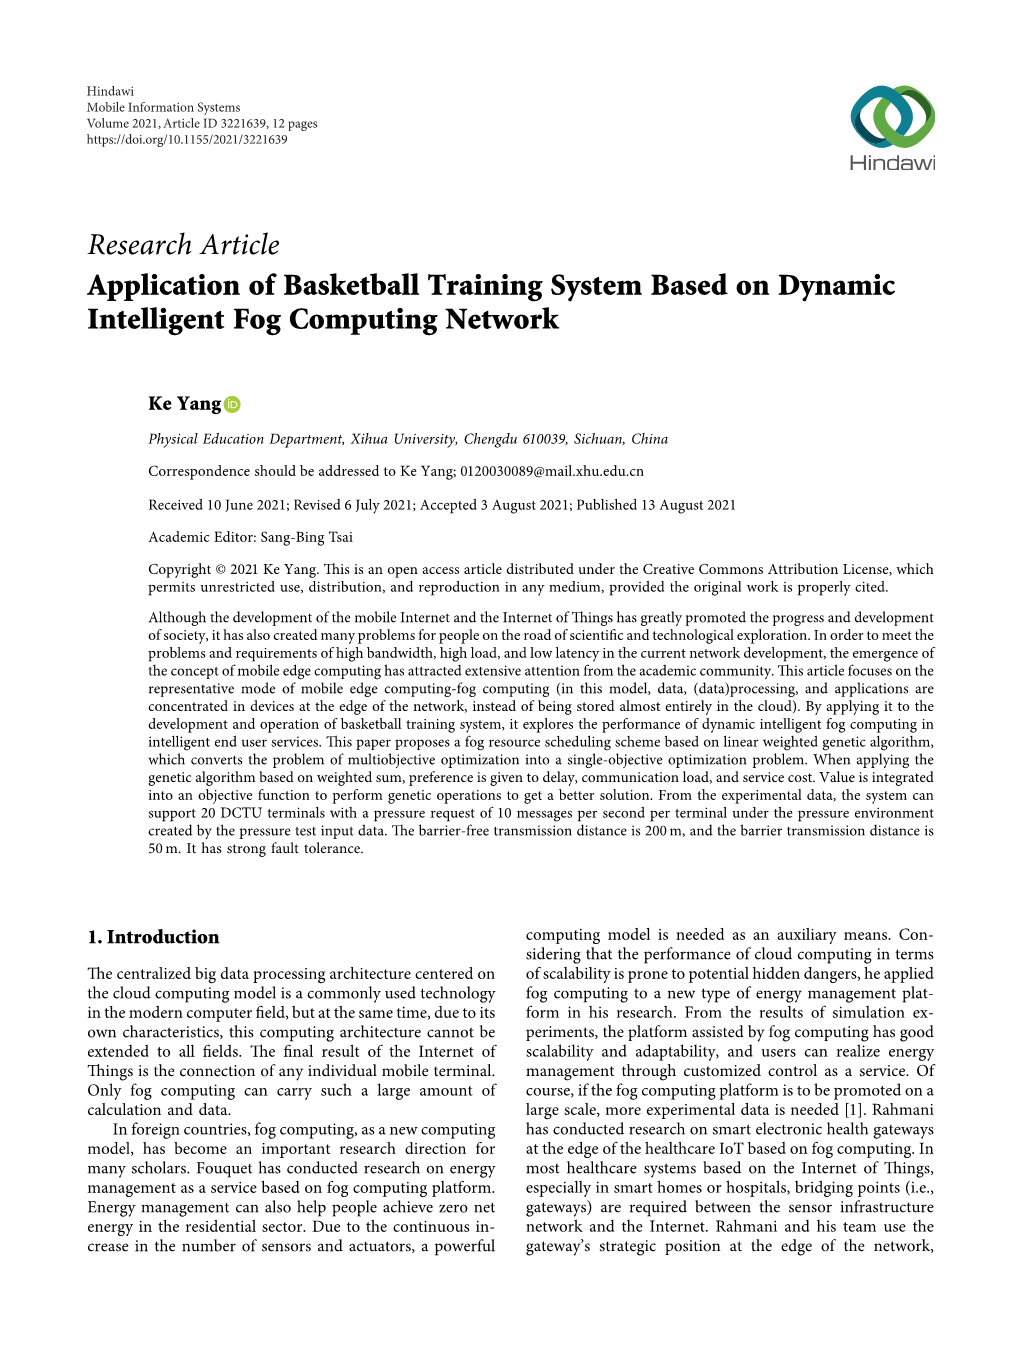 Application of Basketball Training System Based on Dynamic Intelligent Fog Computing Network